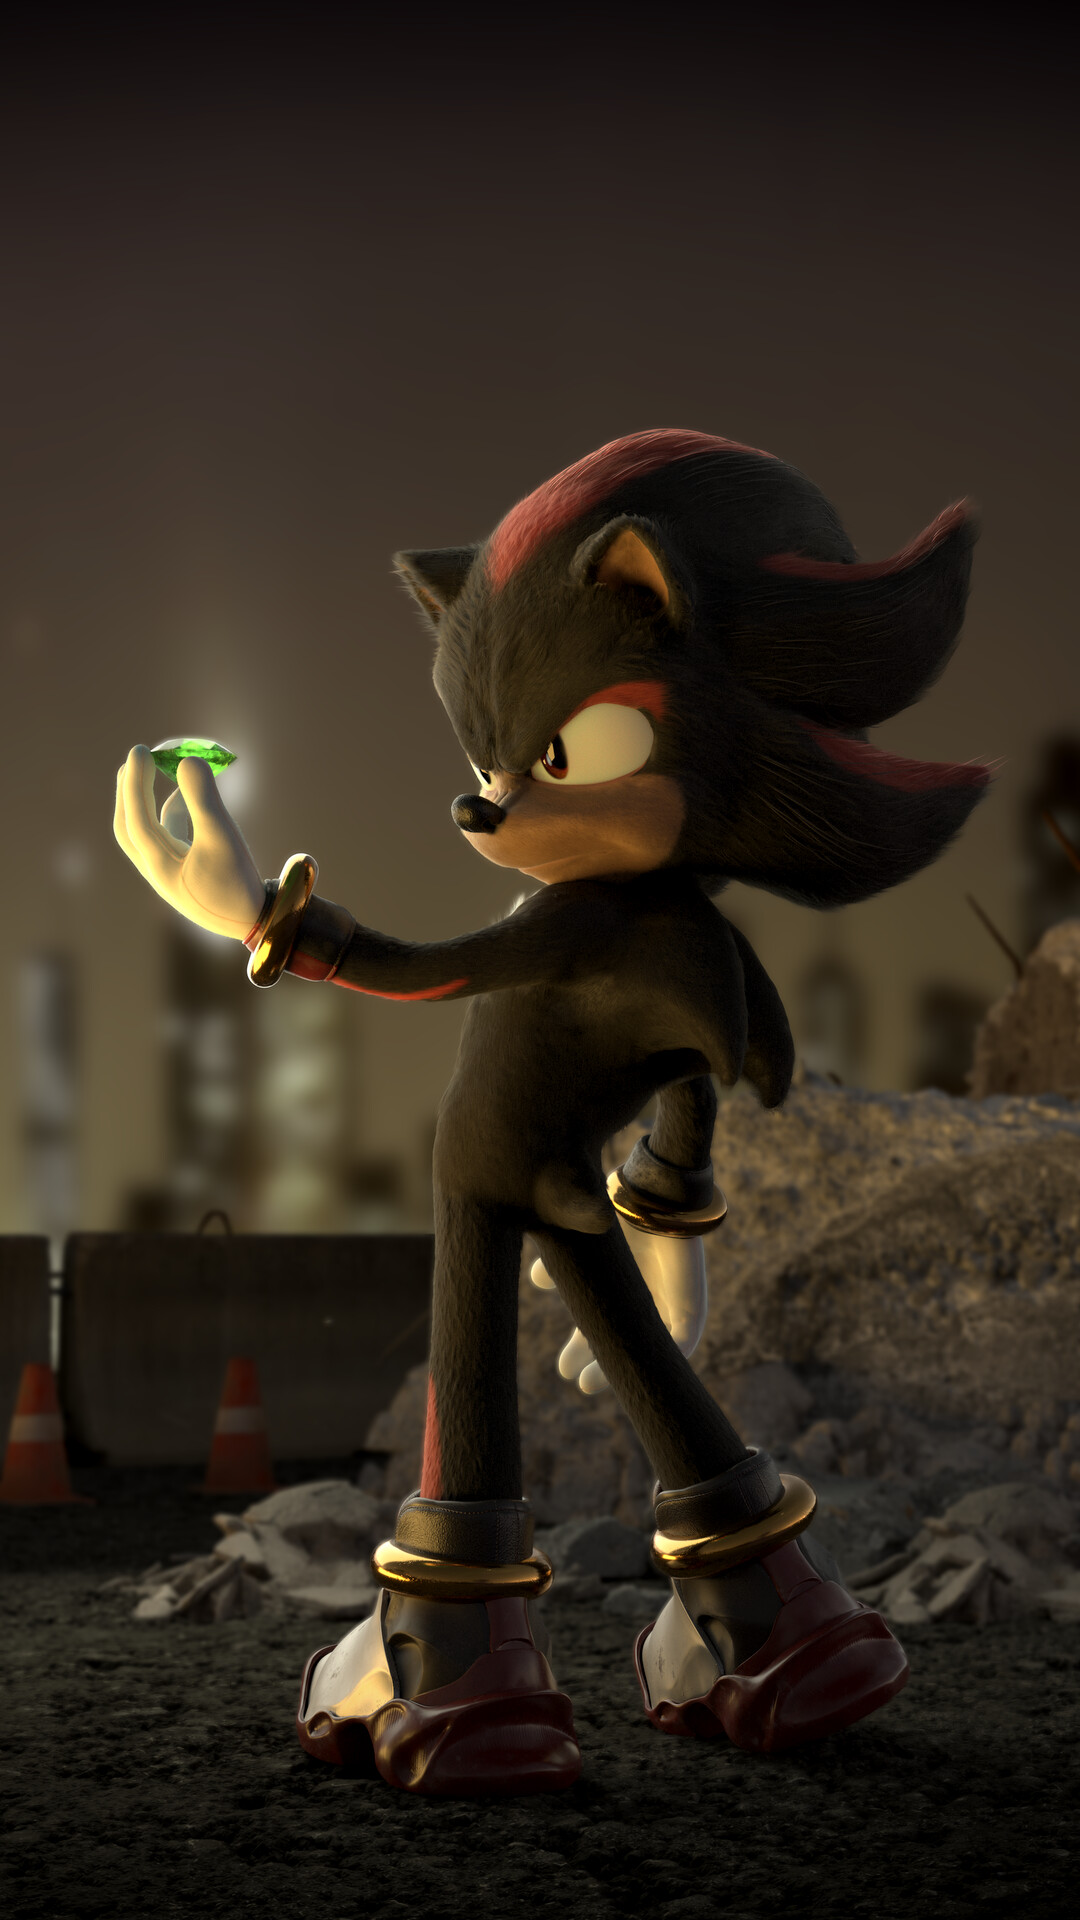 ArtStation - Tails- Sonic the Hedgehog 2 Fanart